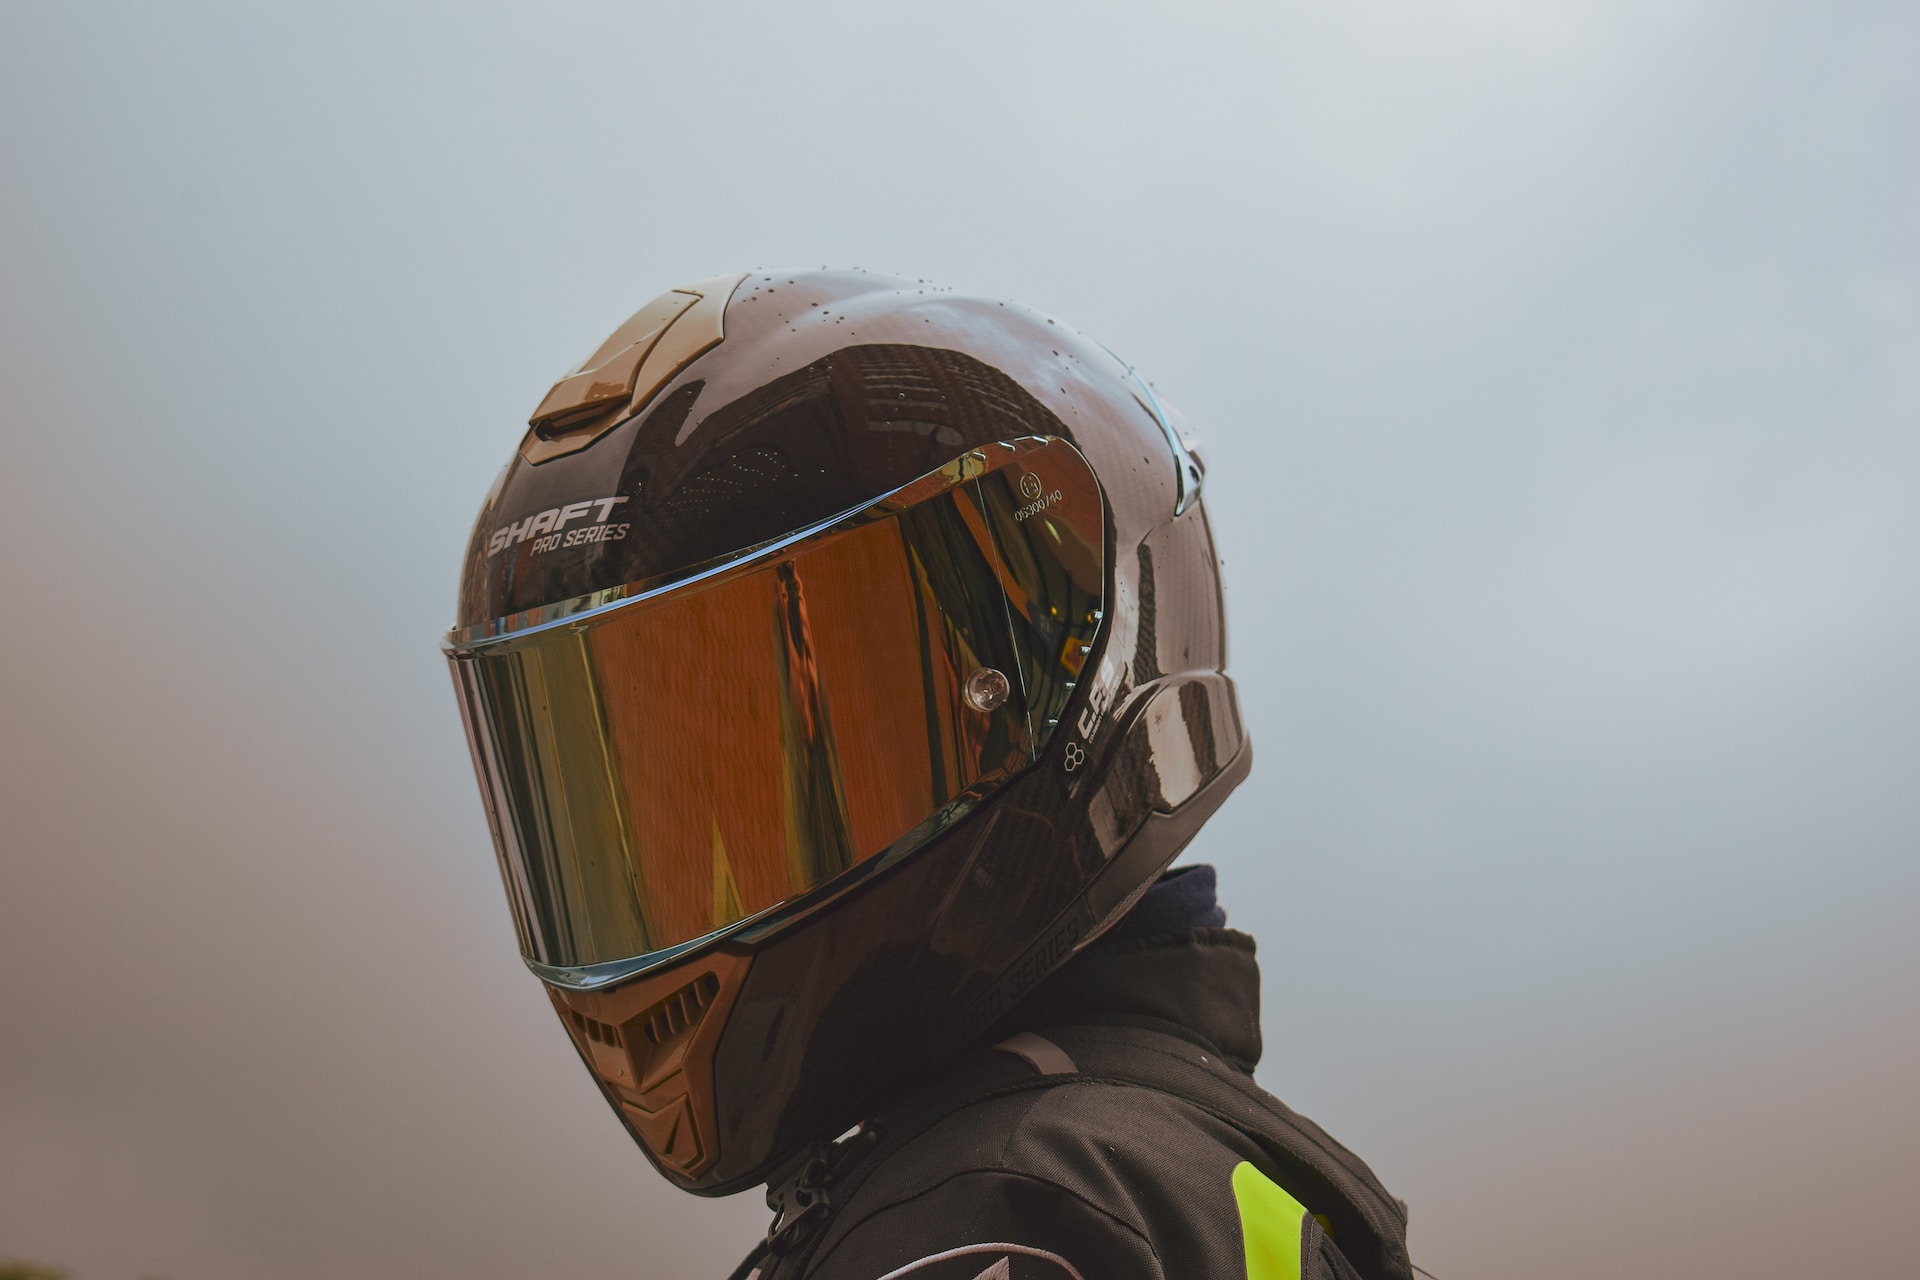 Someone wearing a motorbike helmet